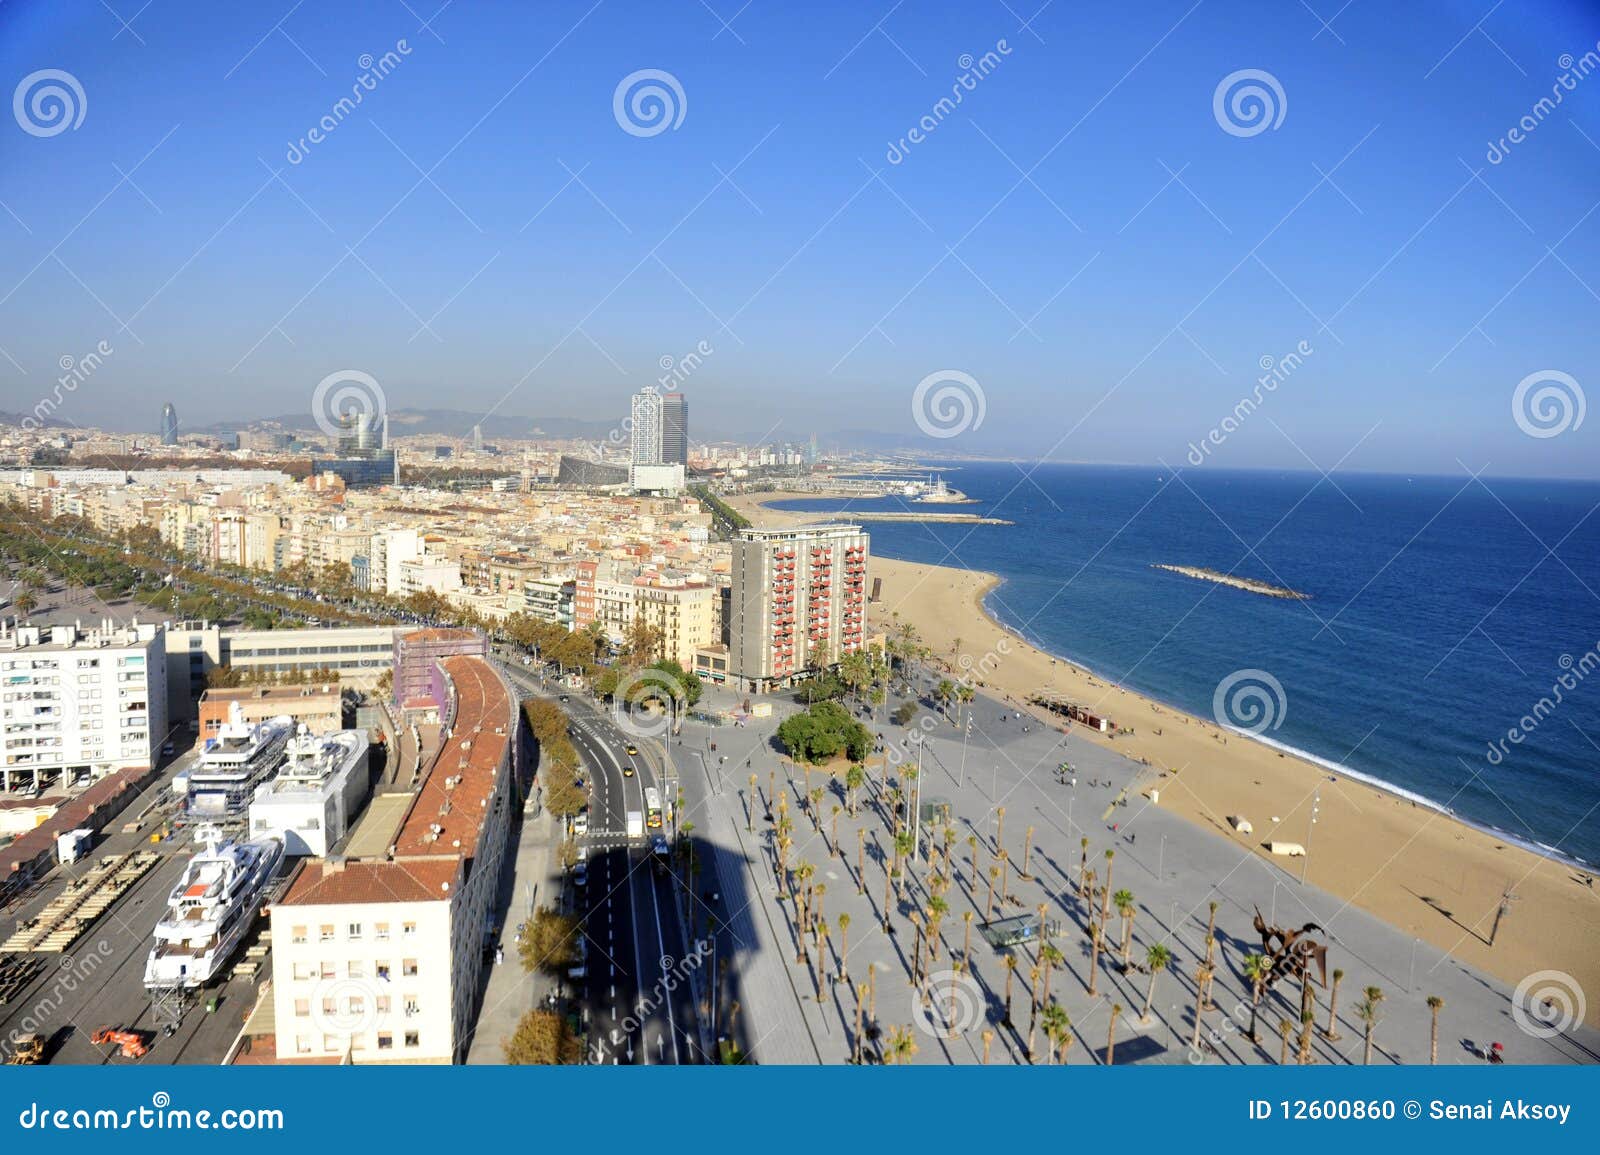 aerial view of east barcelona, spain coast line